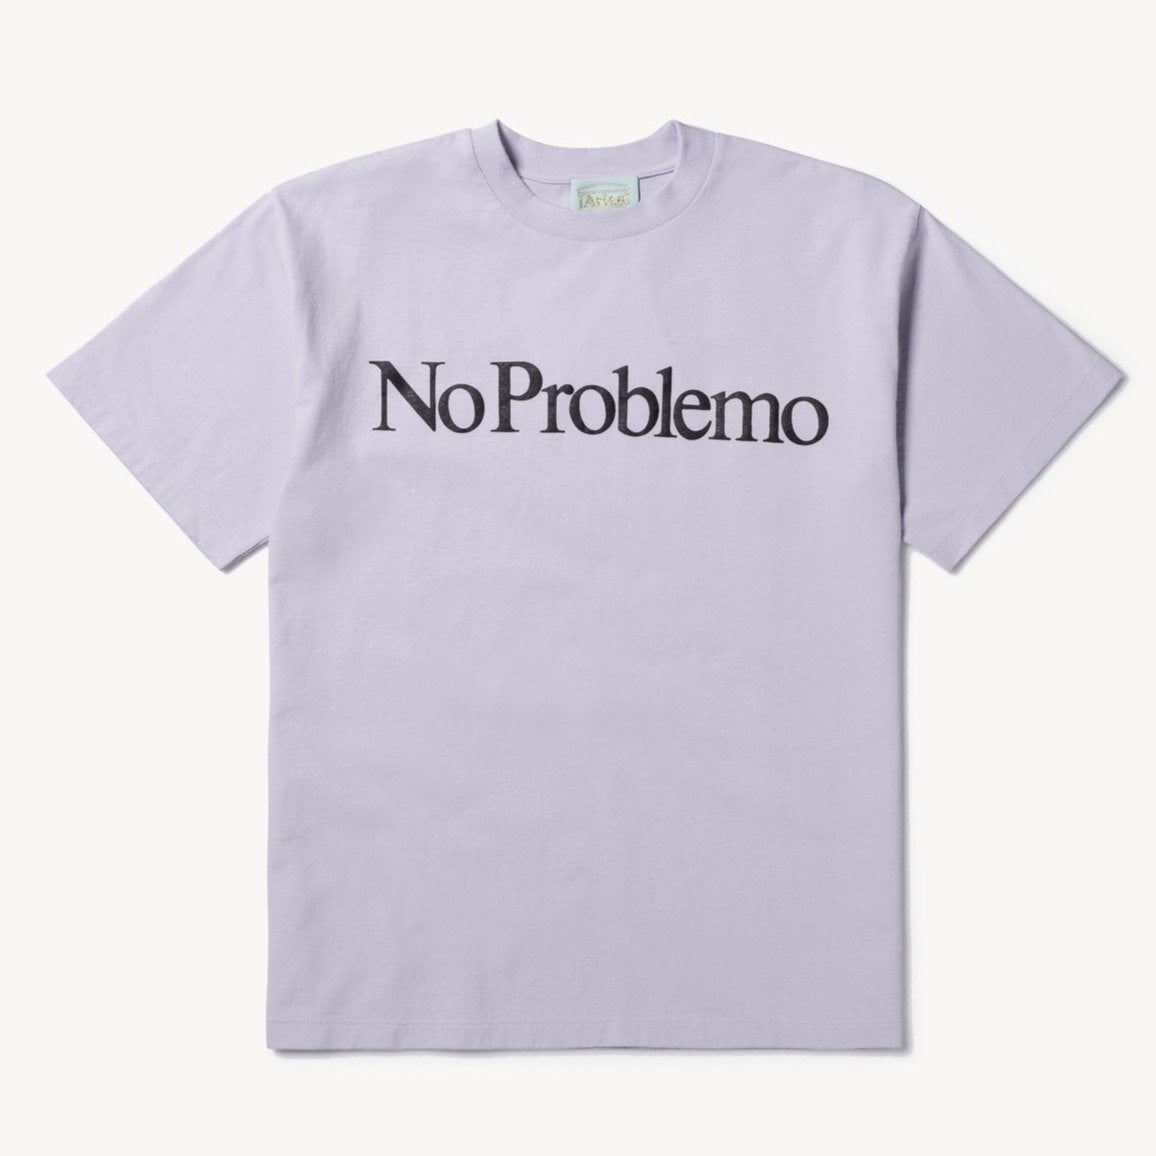 Aries Arise No Problemo T-Shirt